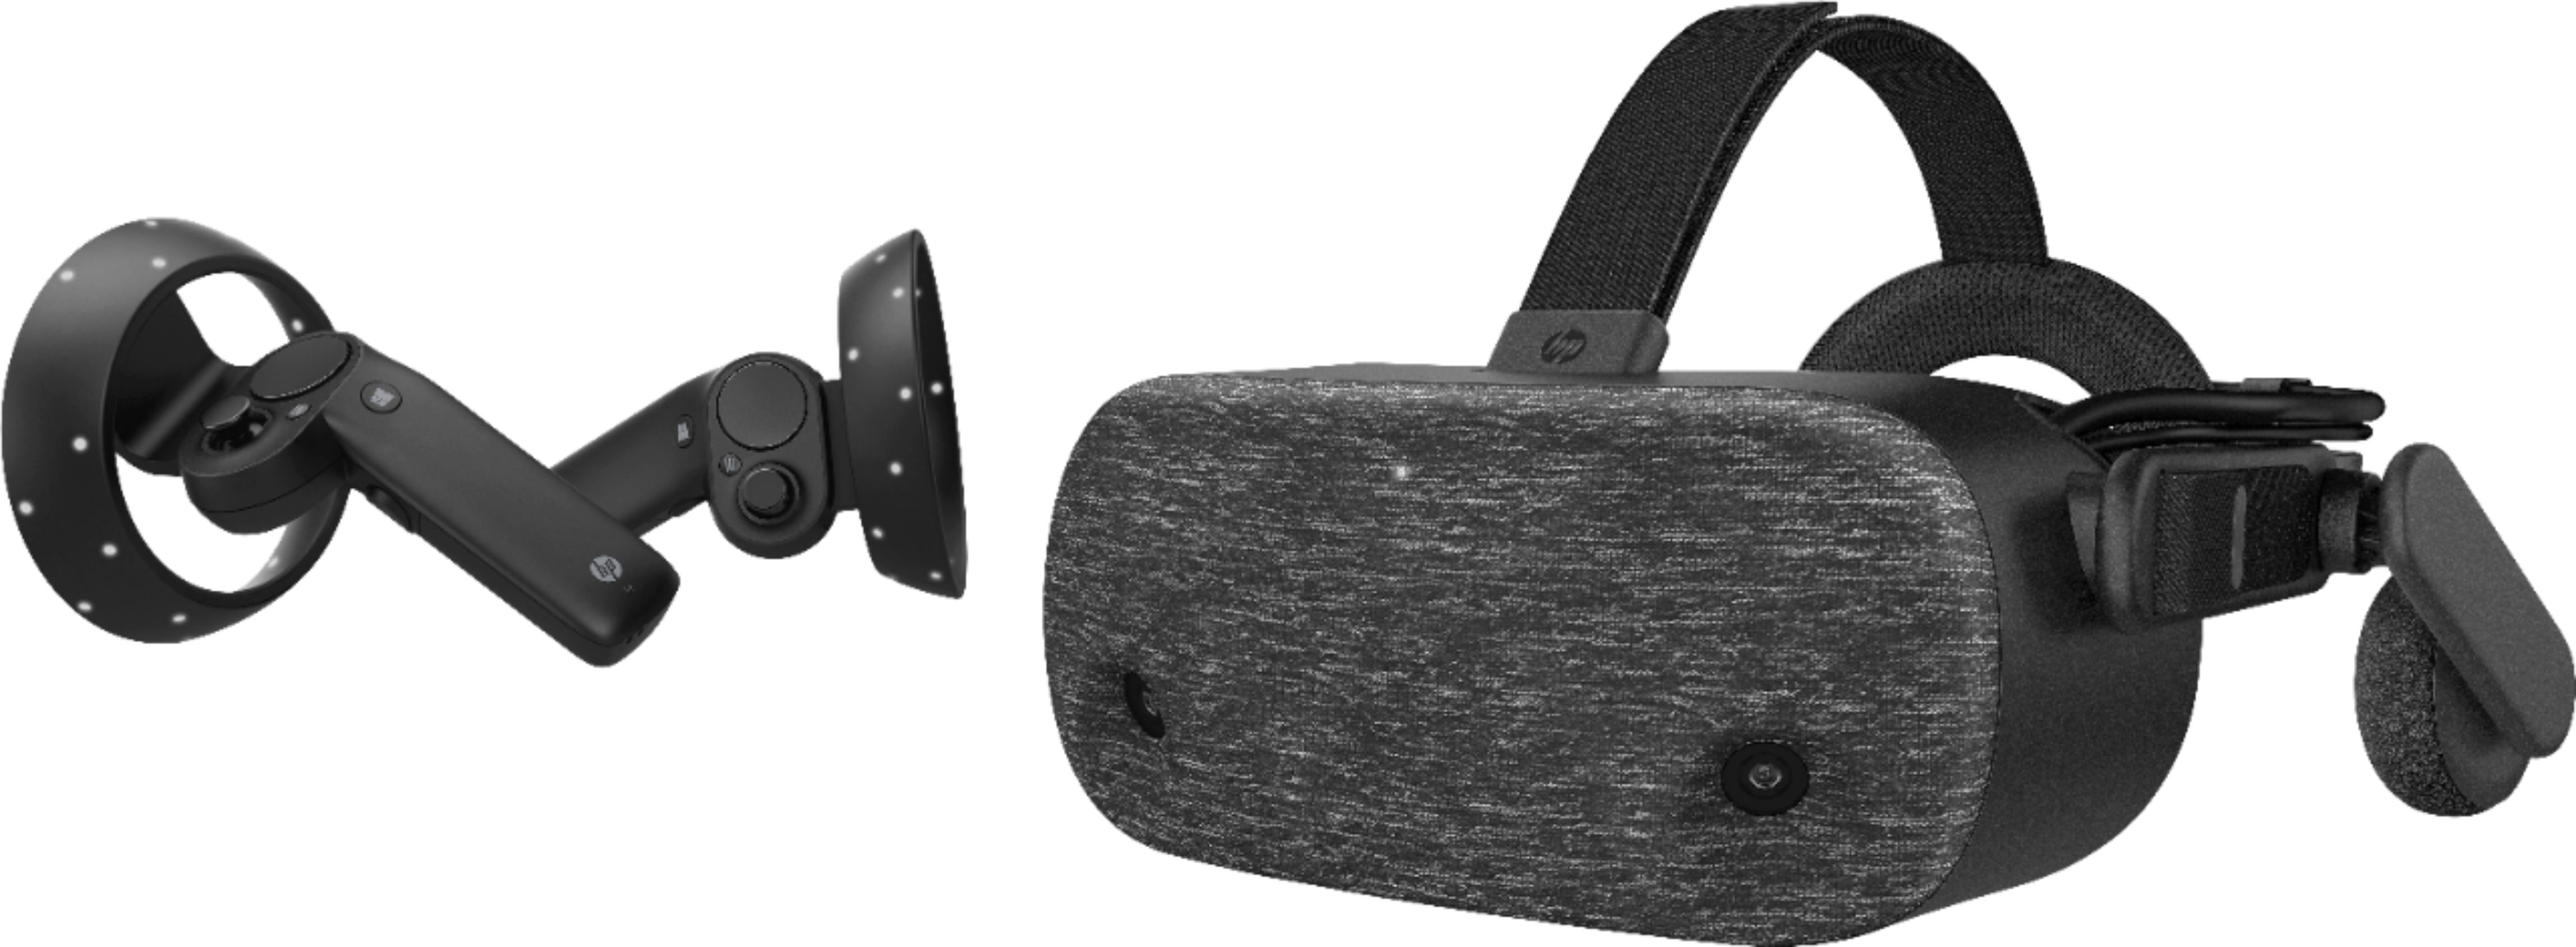 HP Reverb G2 Virtual Reality Headset - Black (1G5U1AA#ABA) for sale online